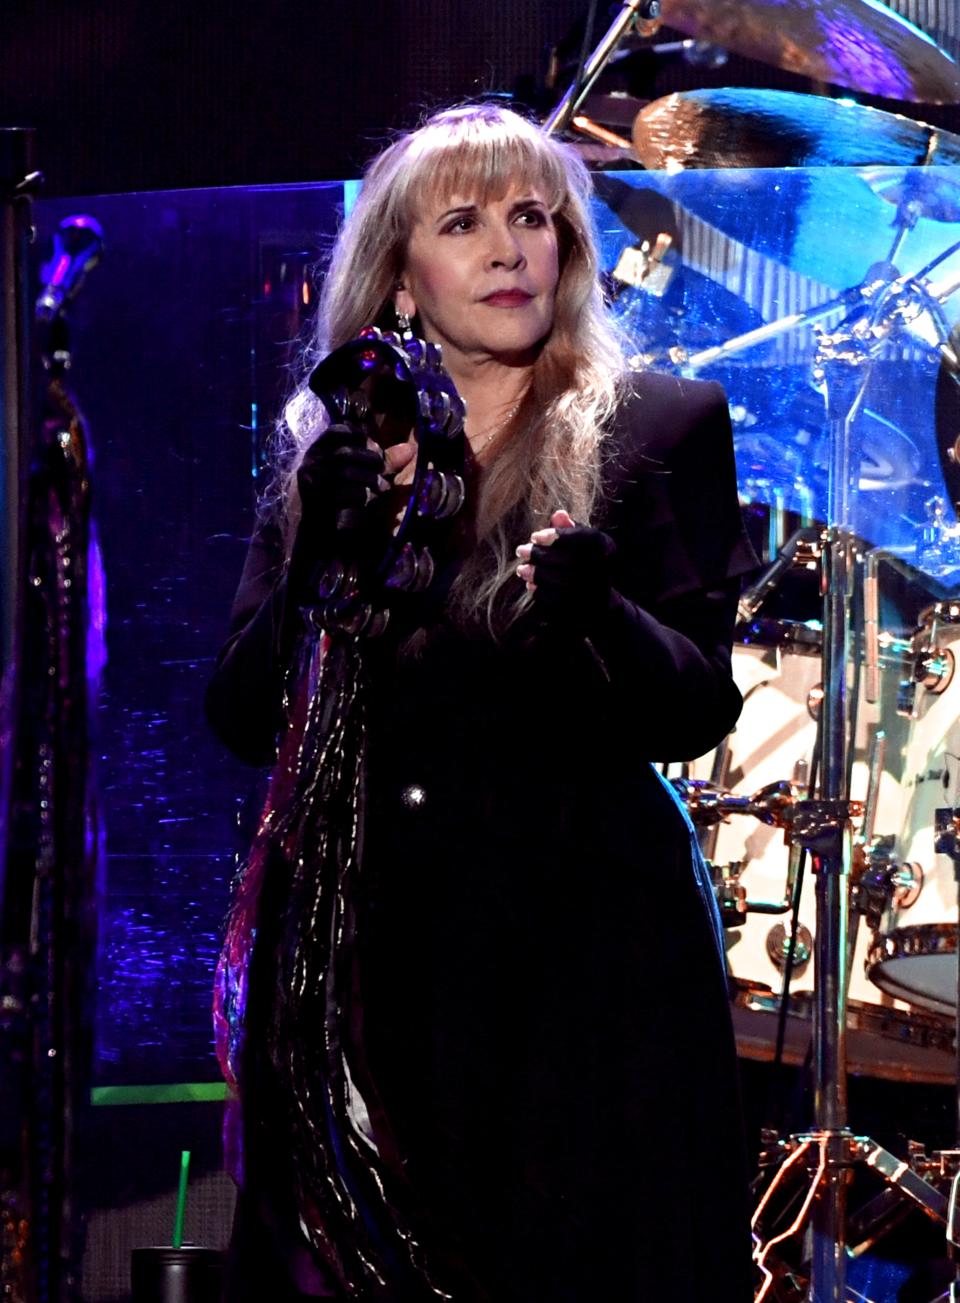 Stevie Nicks canceled her 2021 tour dates over COVID-19 concerns.